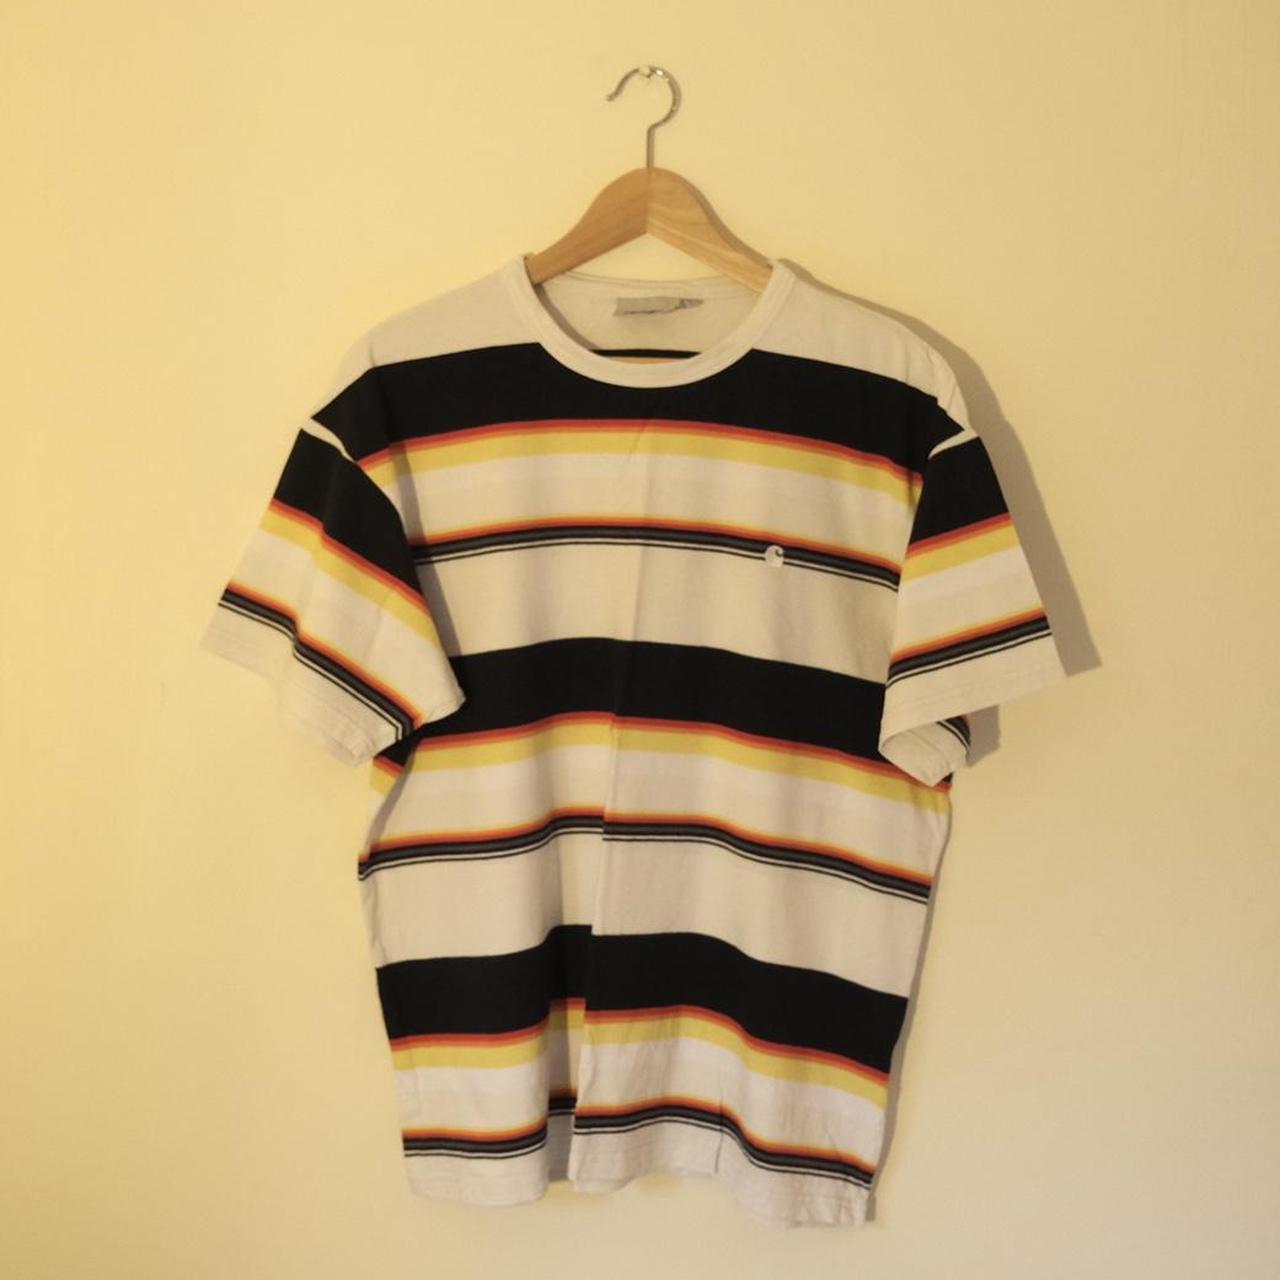 Carhartt T-shirt Striped pattern Size Large Good... - Depop